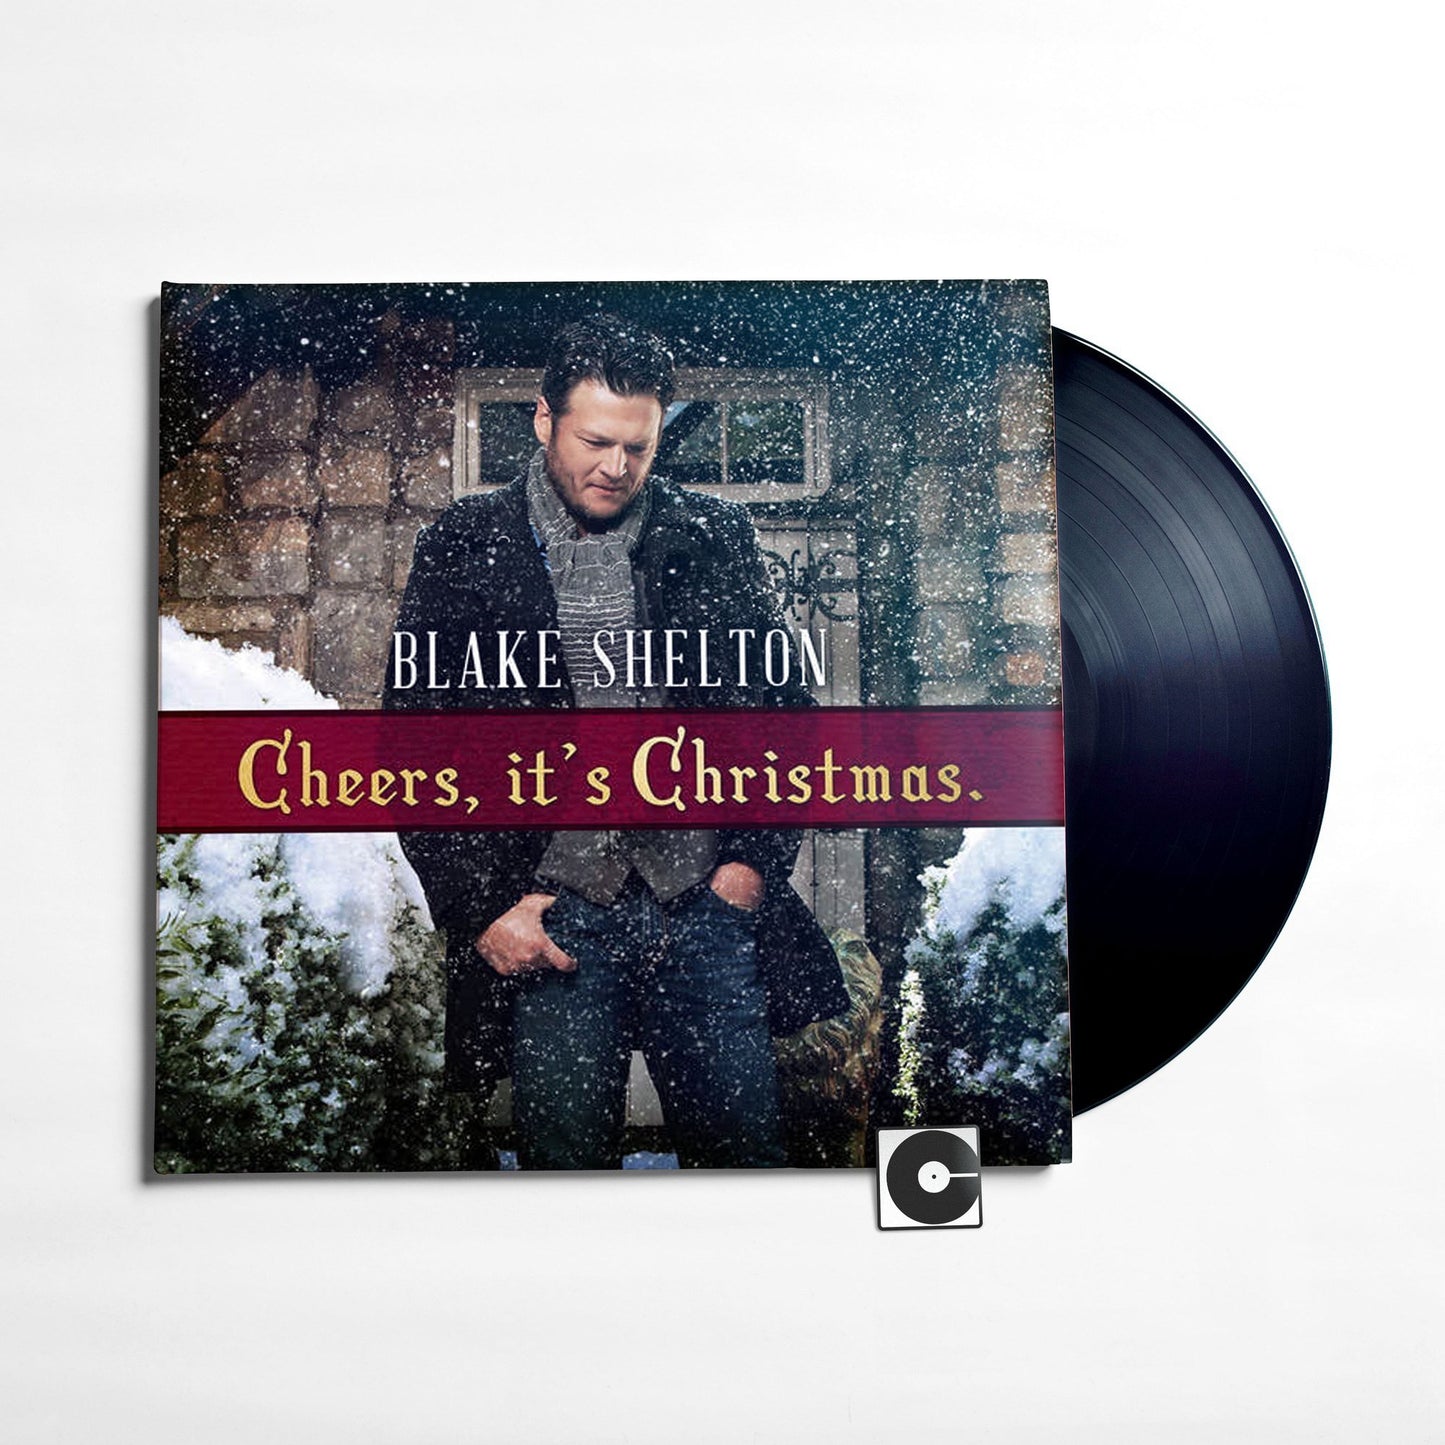 Blake Shelton - "Cheers, It's Christmas"